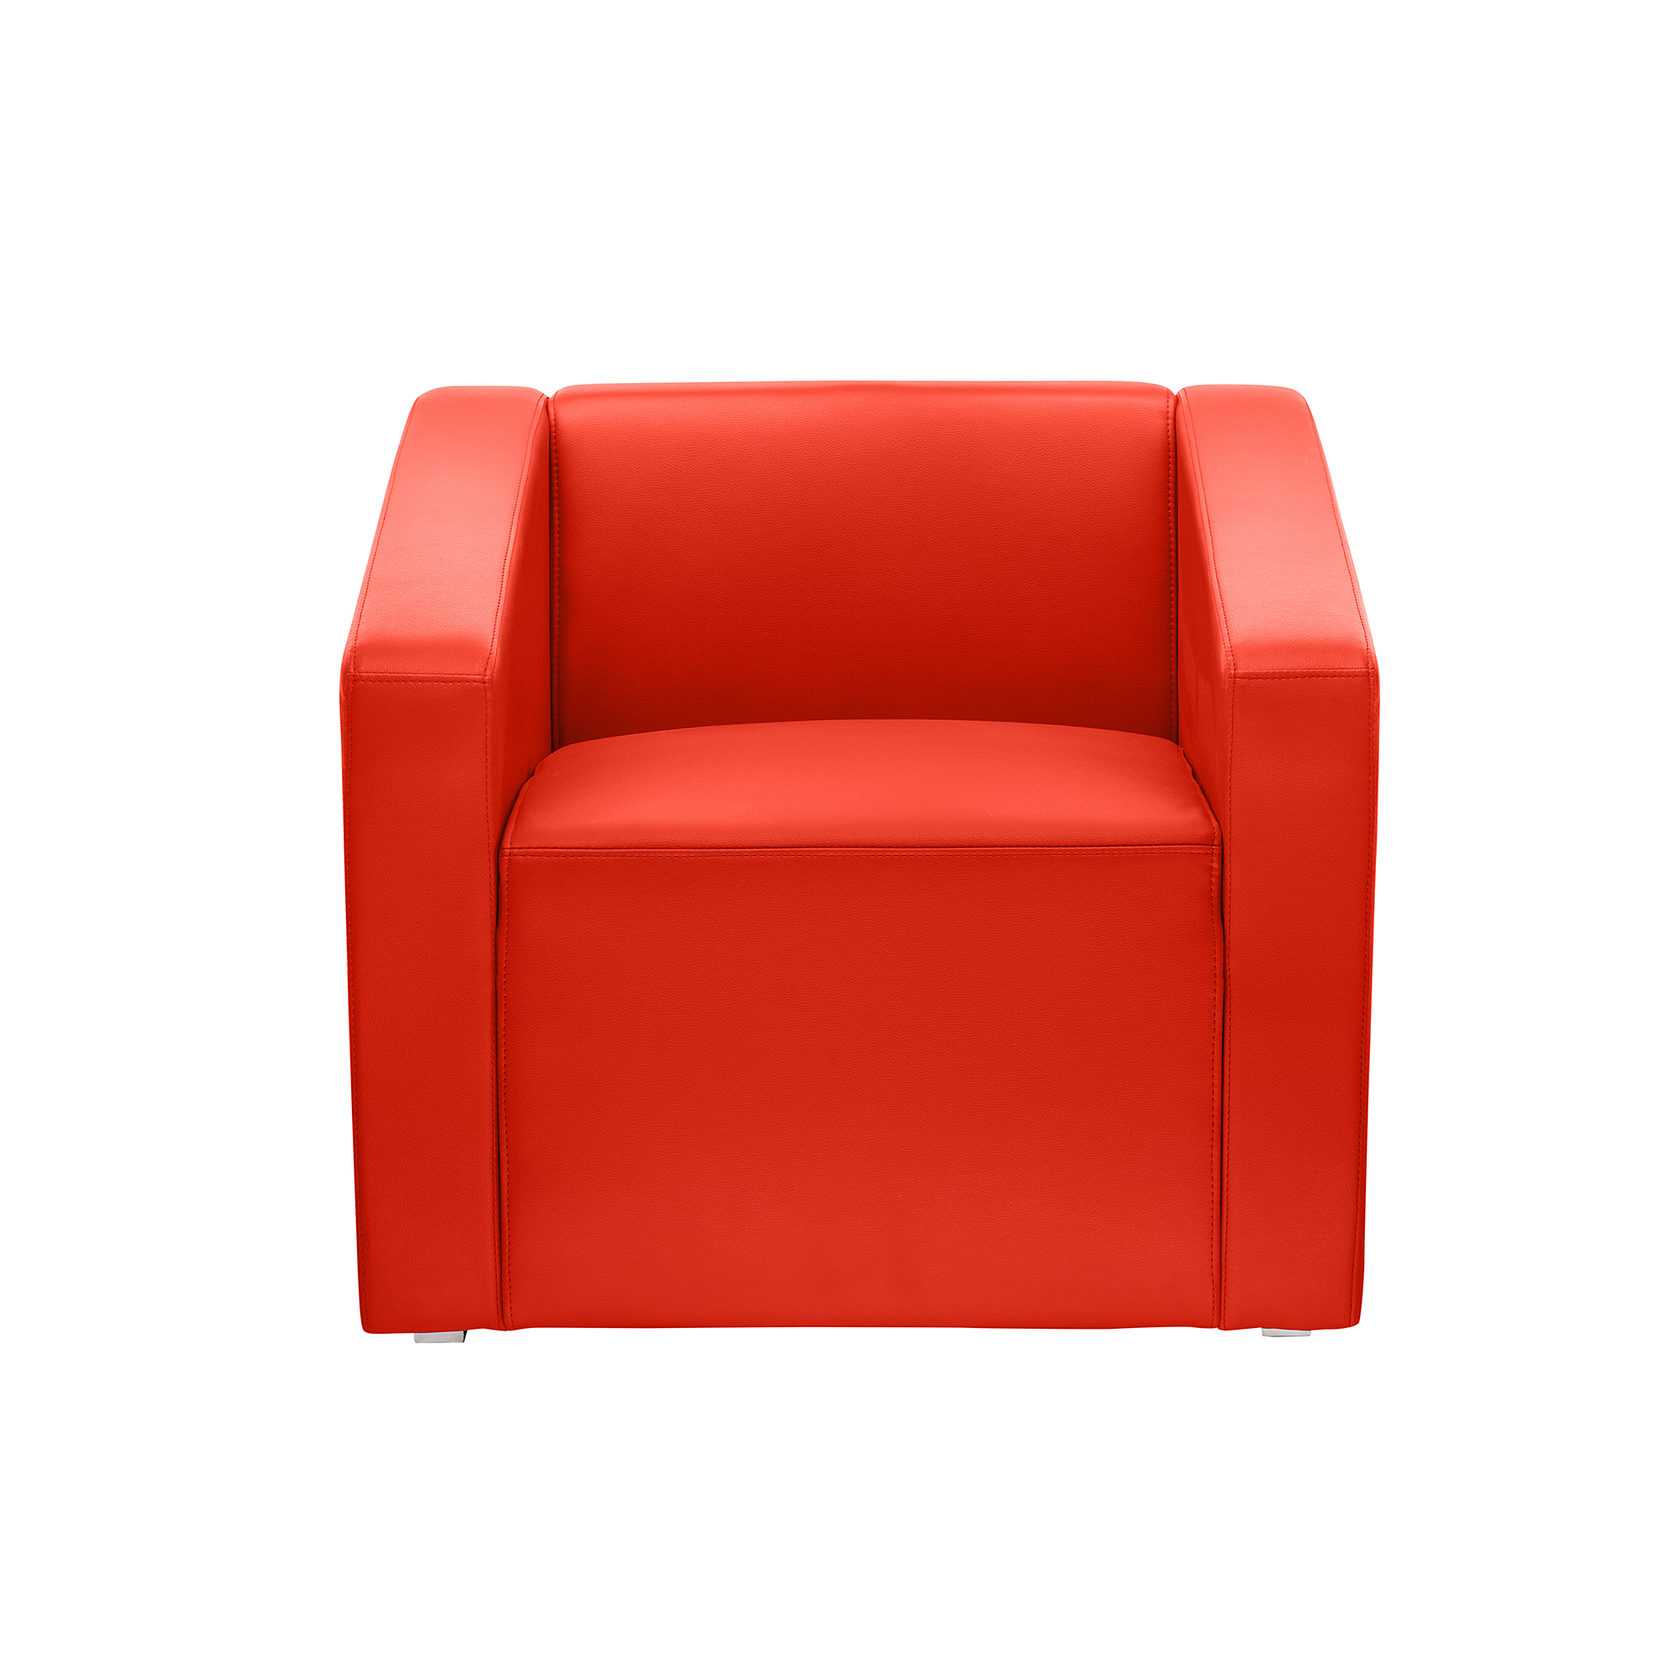 Кресло м. Red Square кресло. Кресло красное, арт. М2610. Красное кресло икеа. Ronald кресло красное.